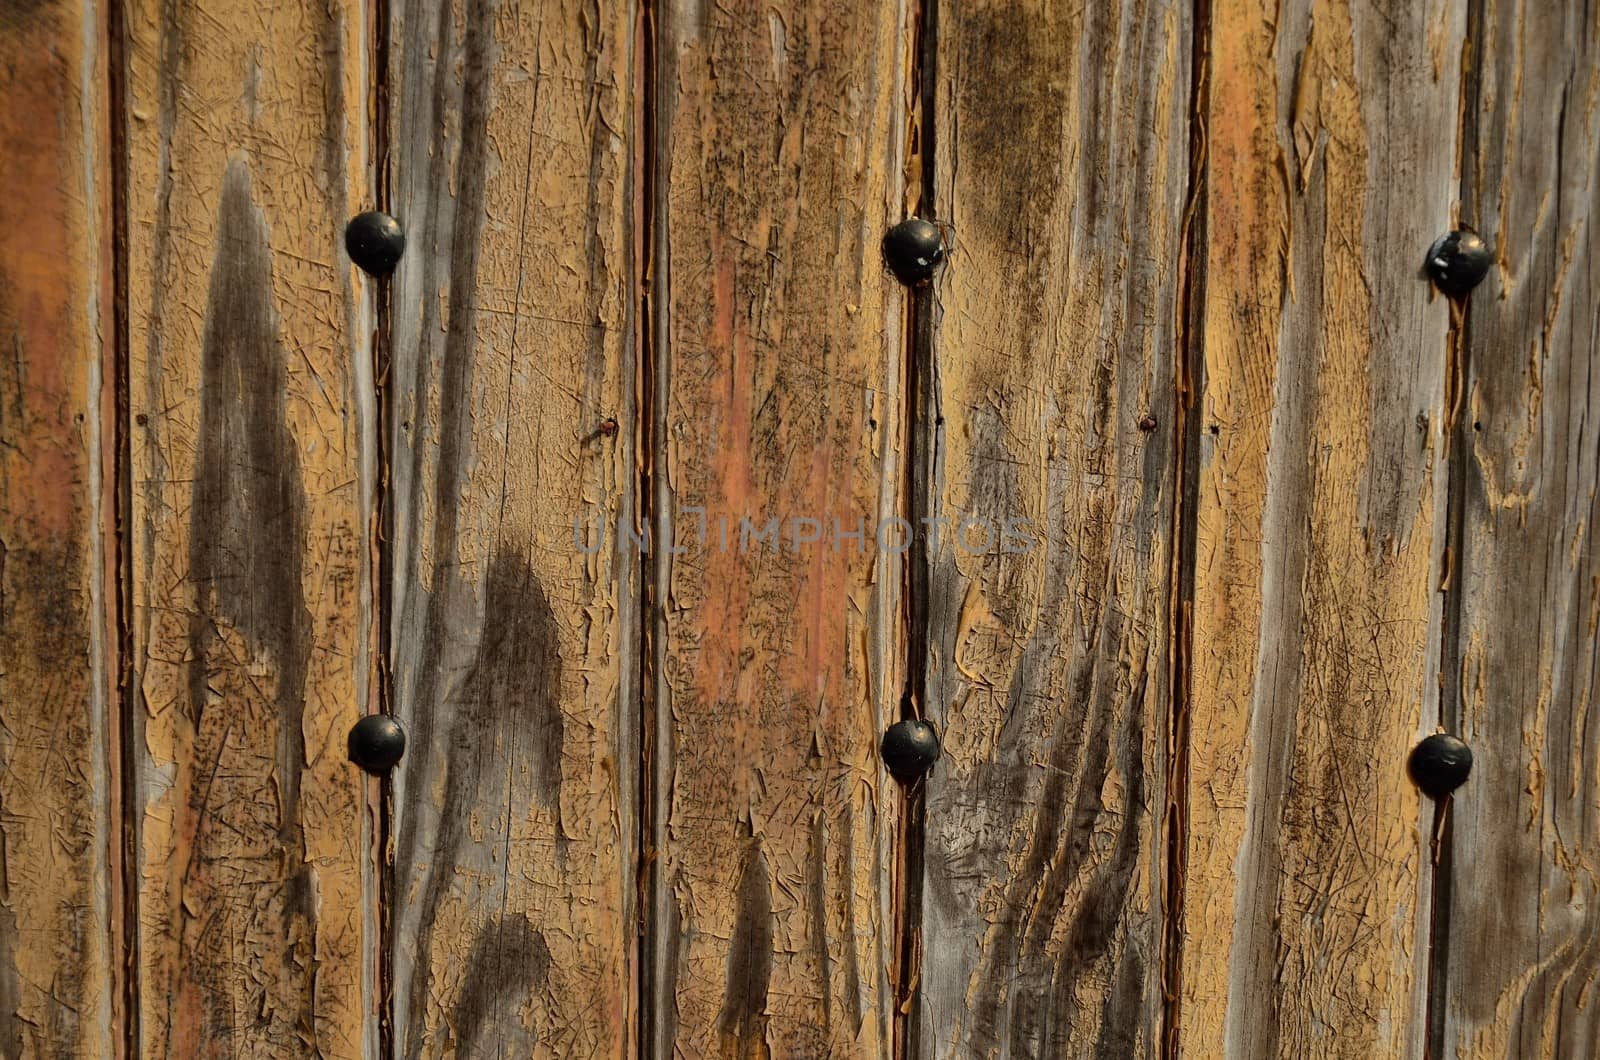 Heavy black bolts on an antique wooden door